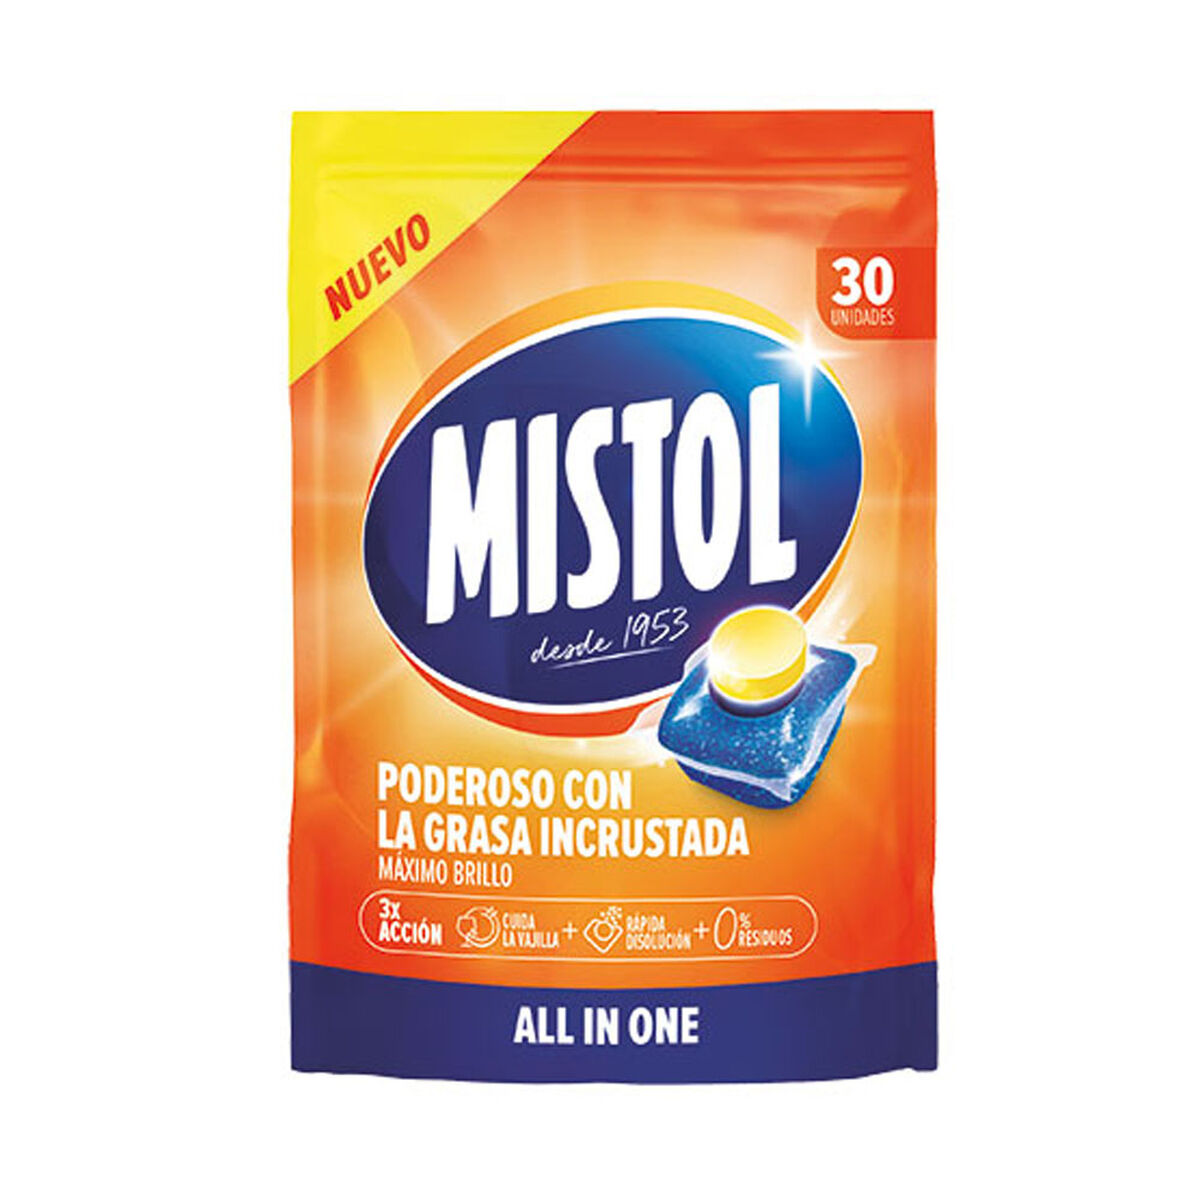 Pastiglie per lavastoviglie Mistol (30 Unità)